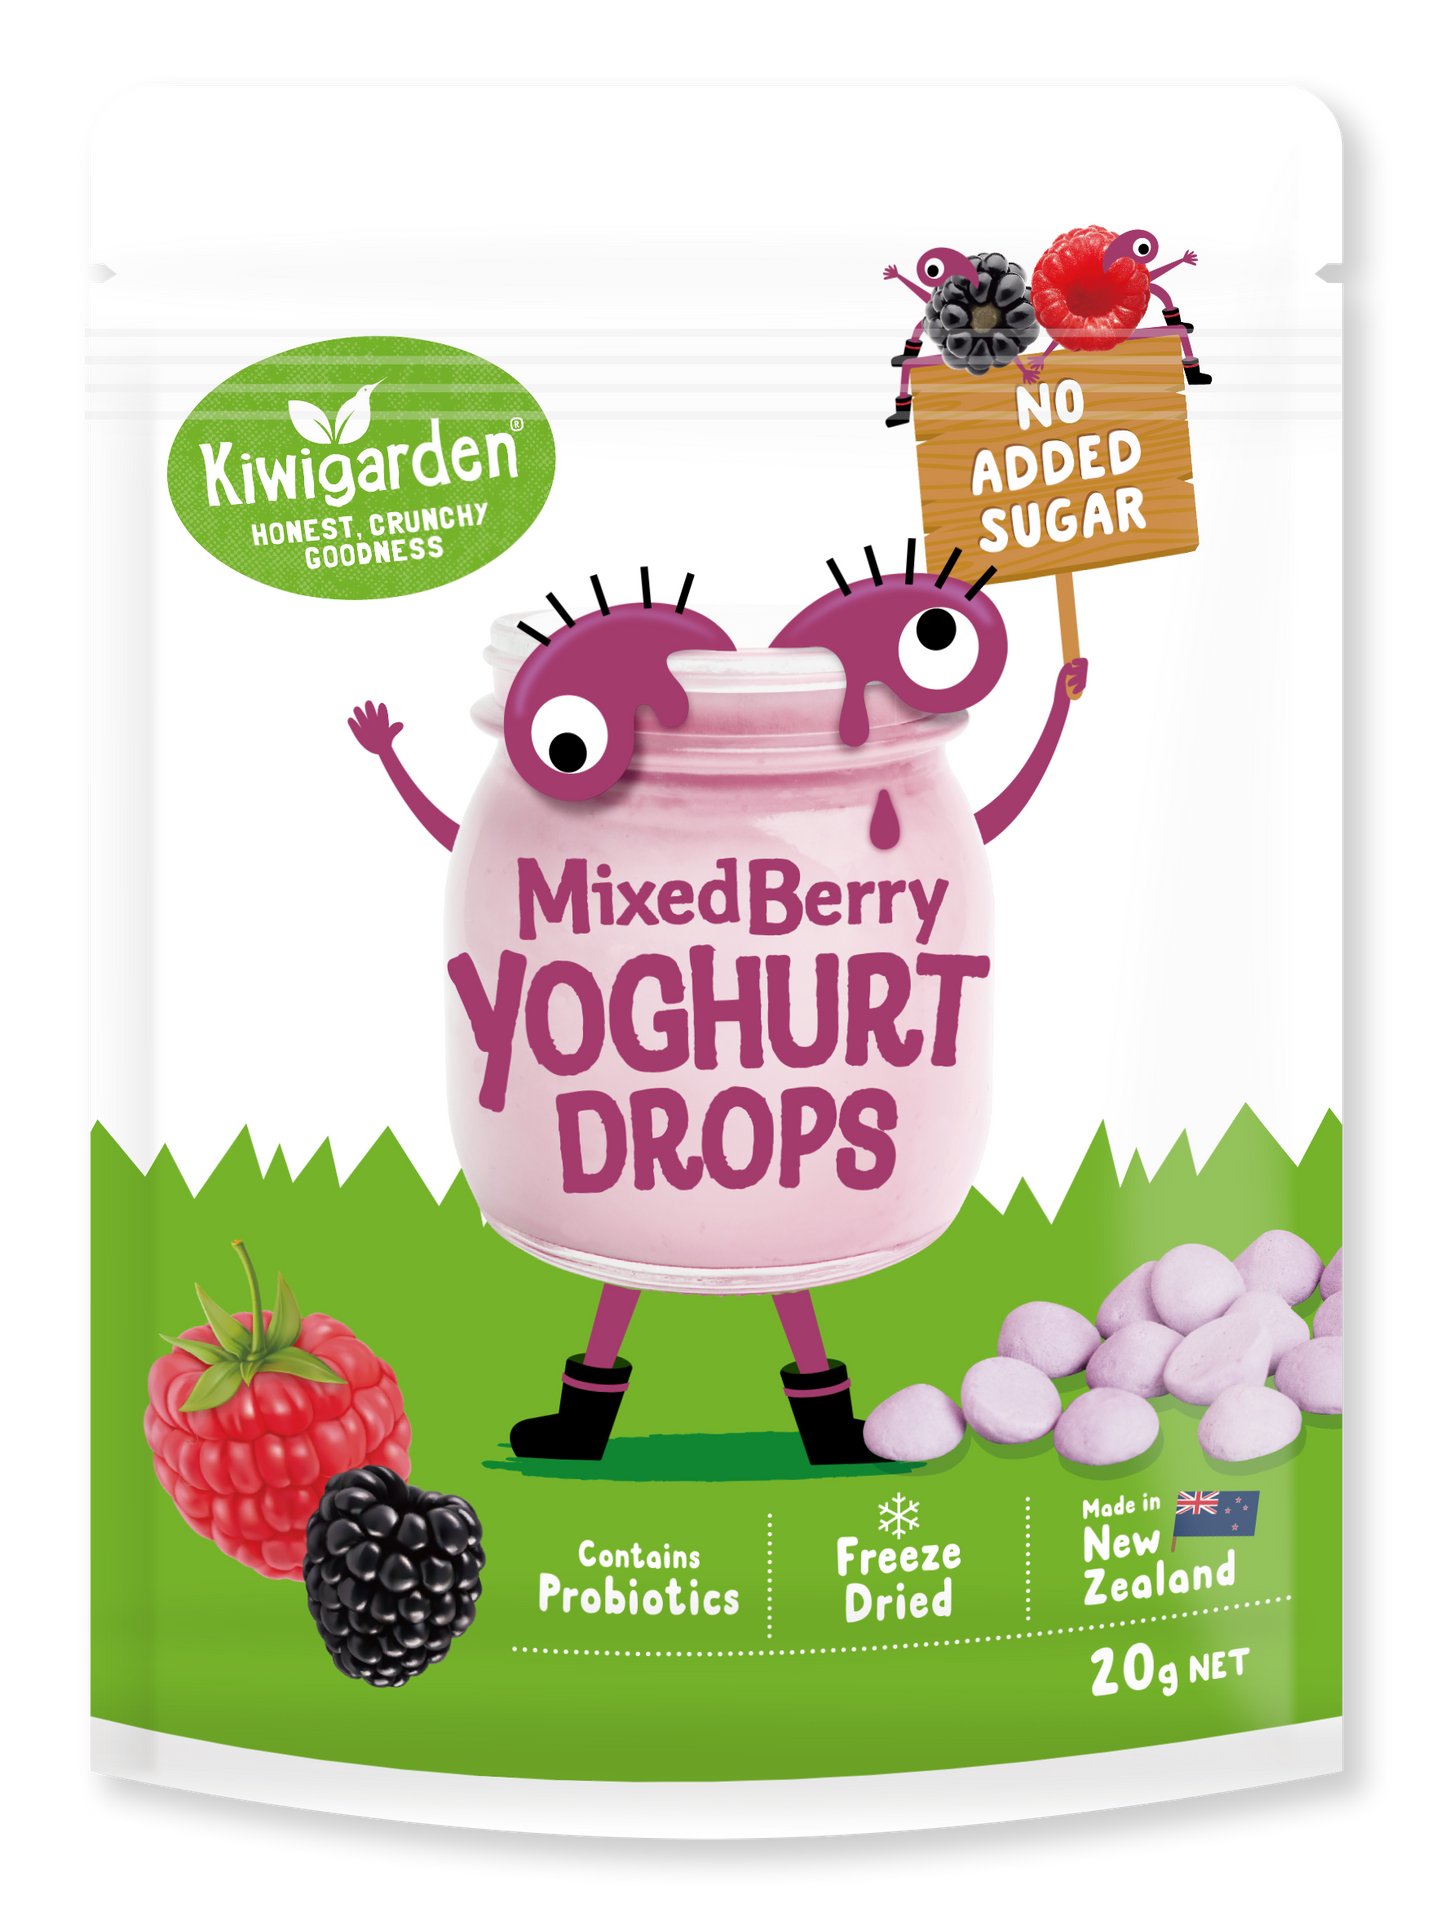 Mixed Berry Yoghurt Drops 20g - No added sugar